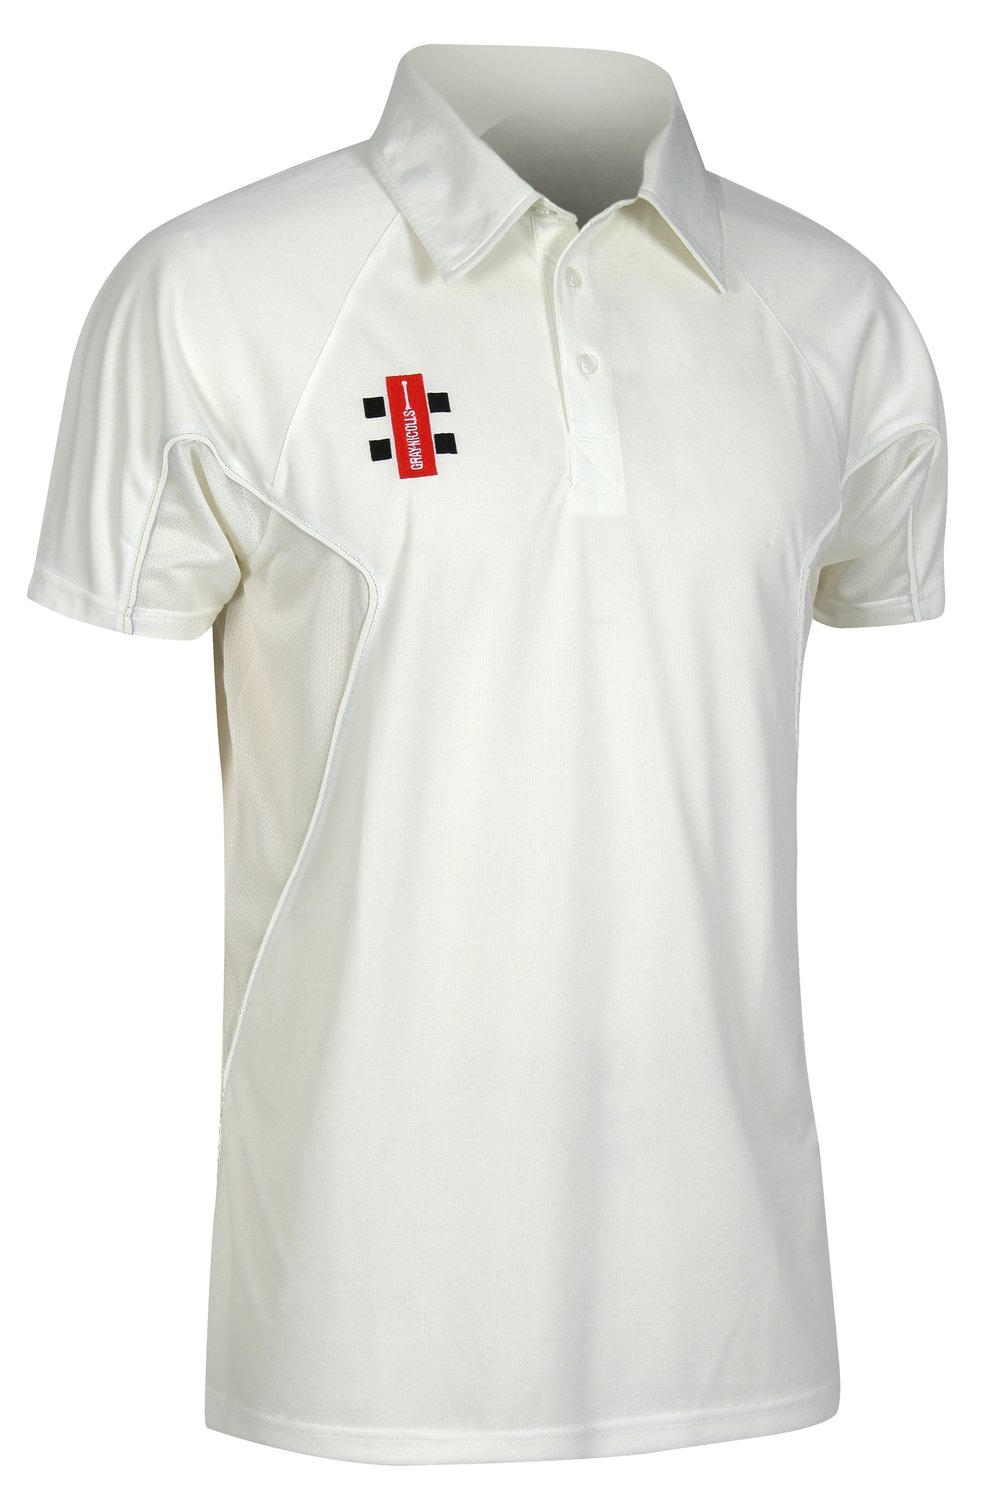 Dawdon Welfare Storm Short Sleeve Cricket Shirt